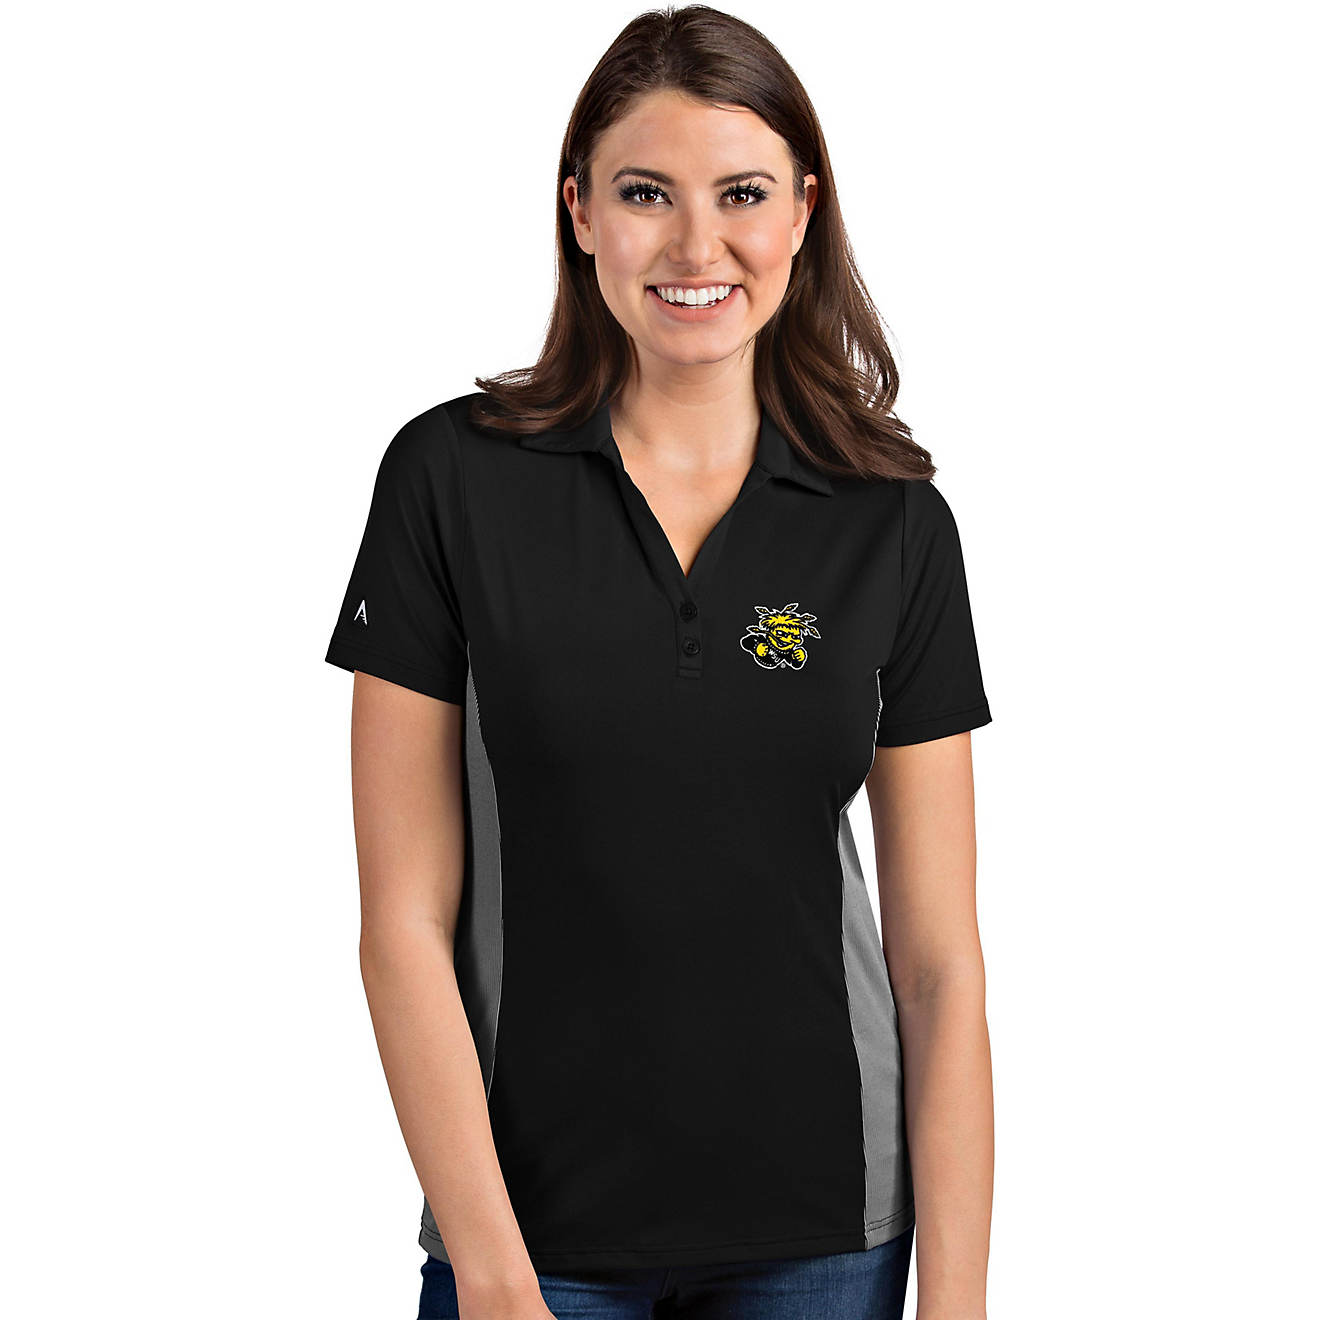 Antigua Women's Wichita State University Venture Polo Shirt                                                                      - view number 1